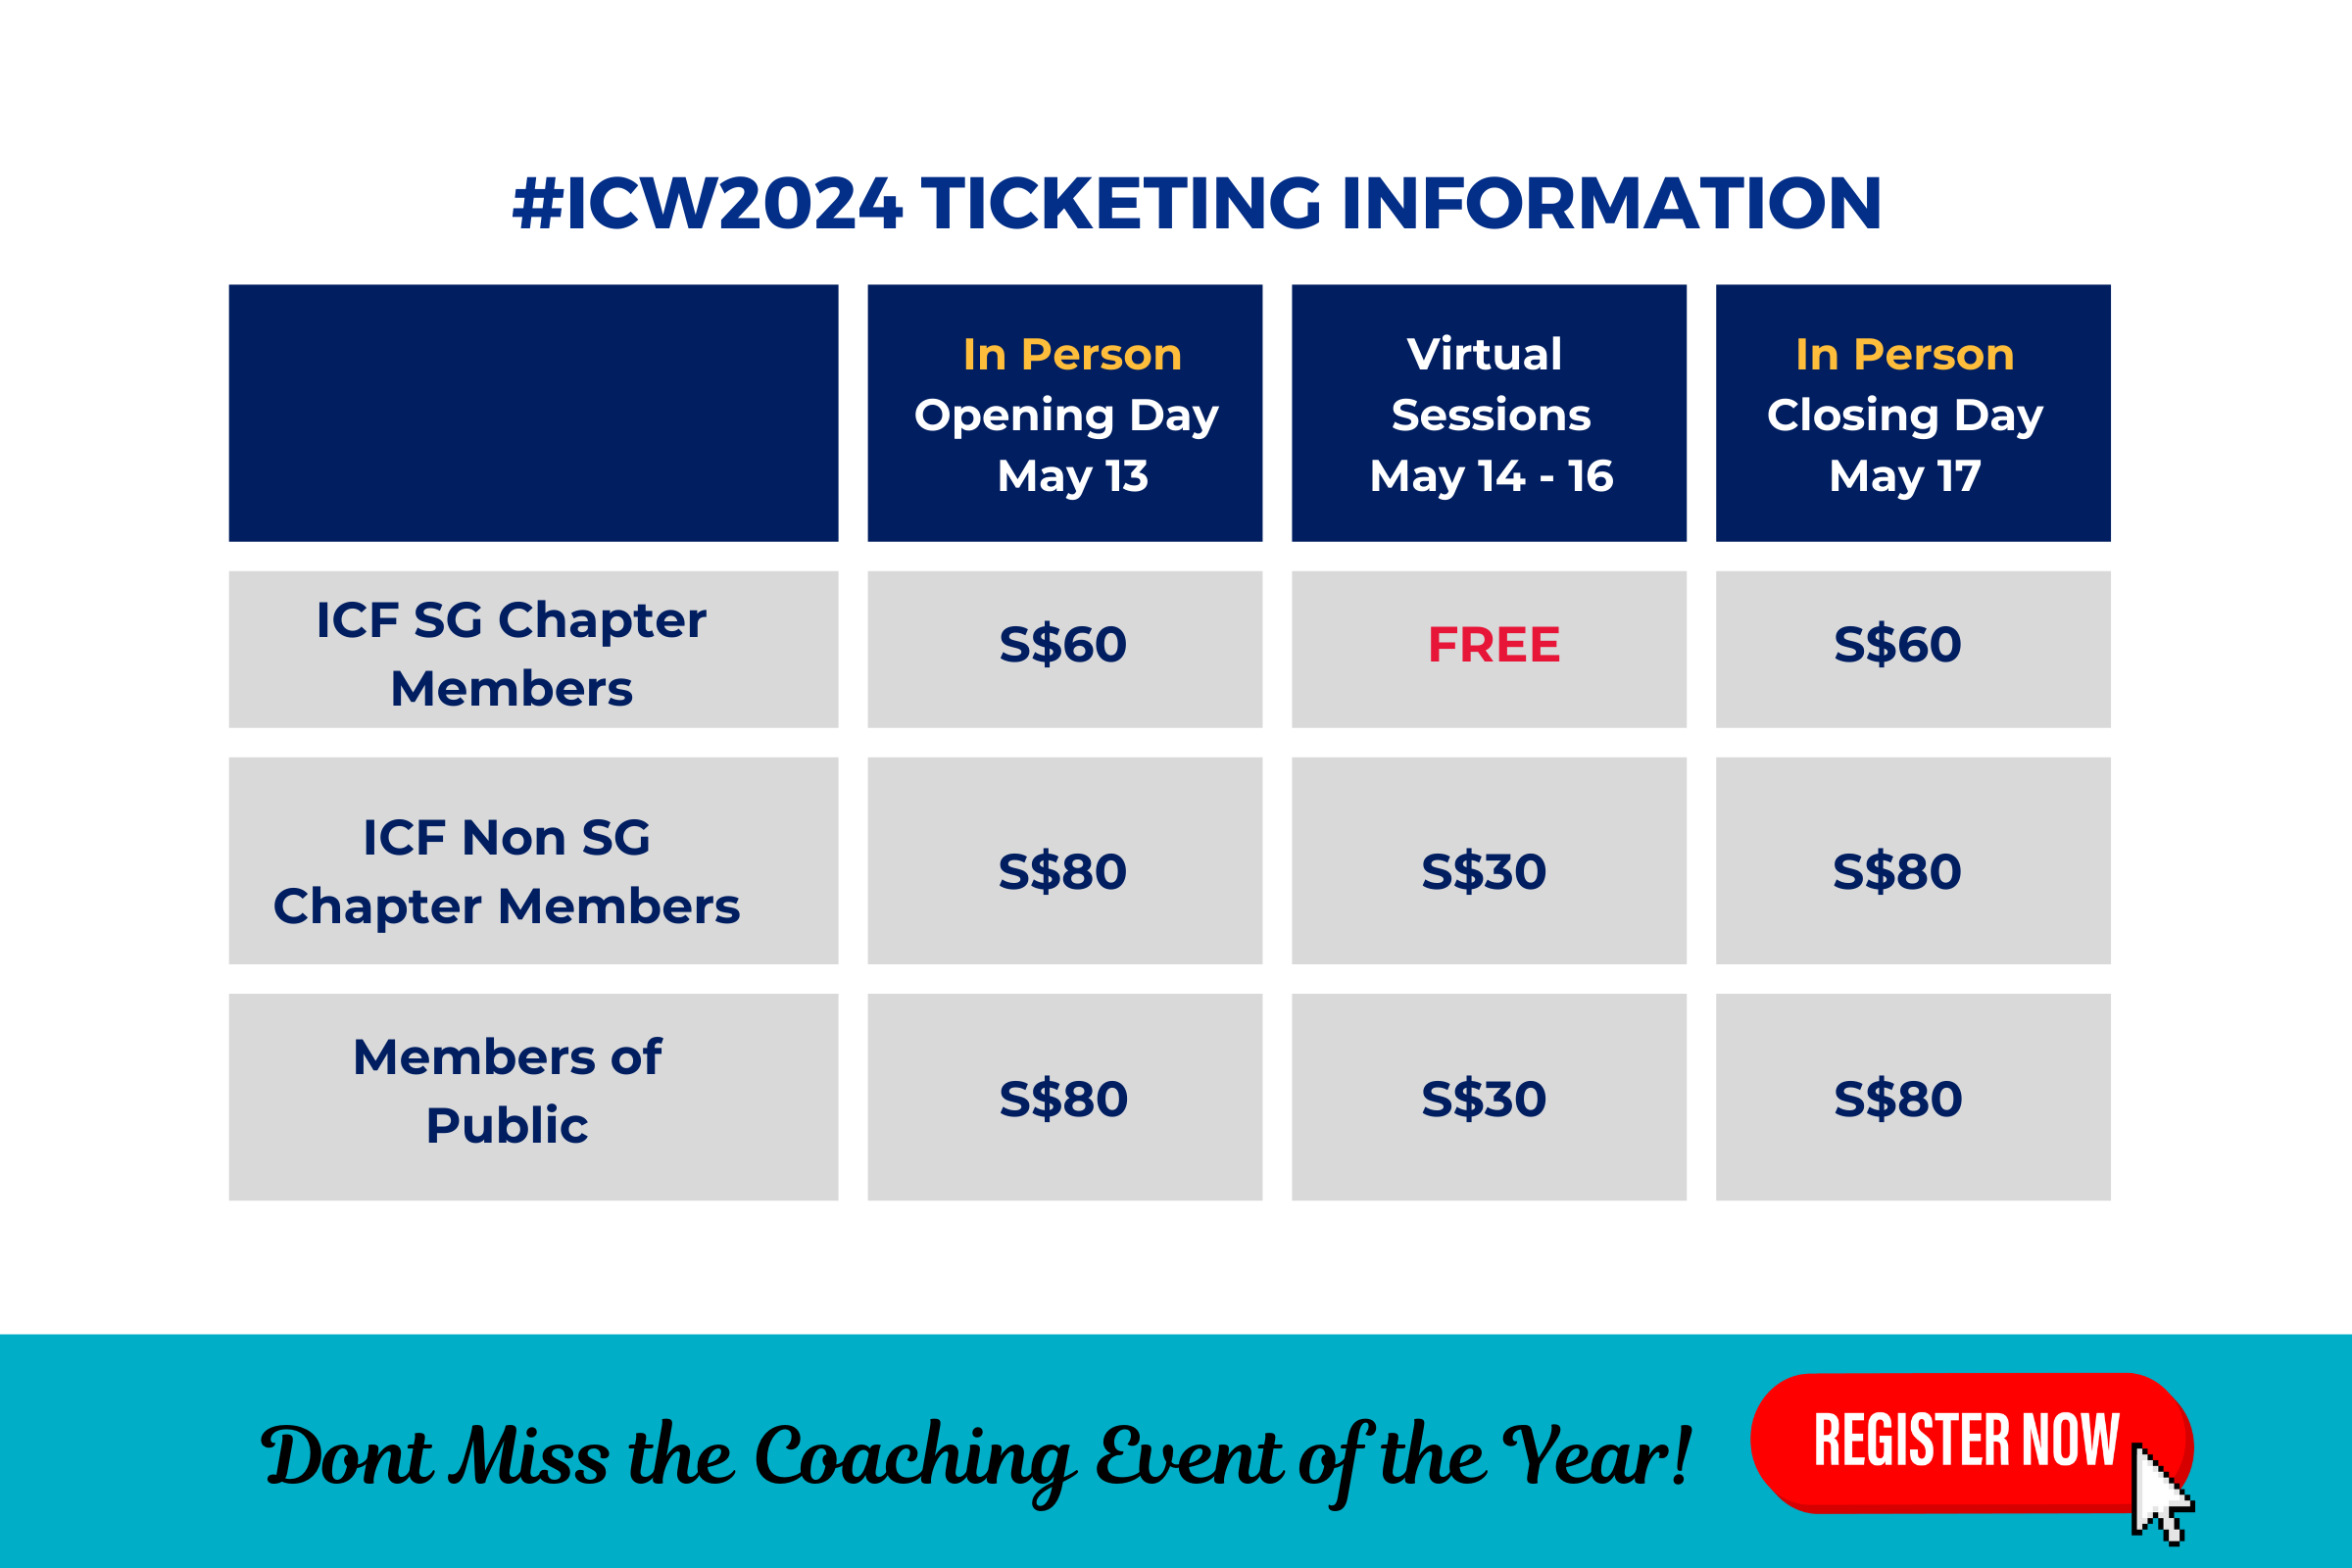 ICW 2024 ticketing